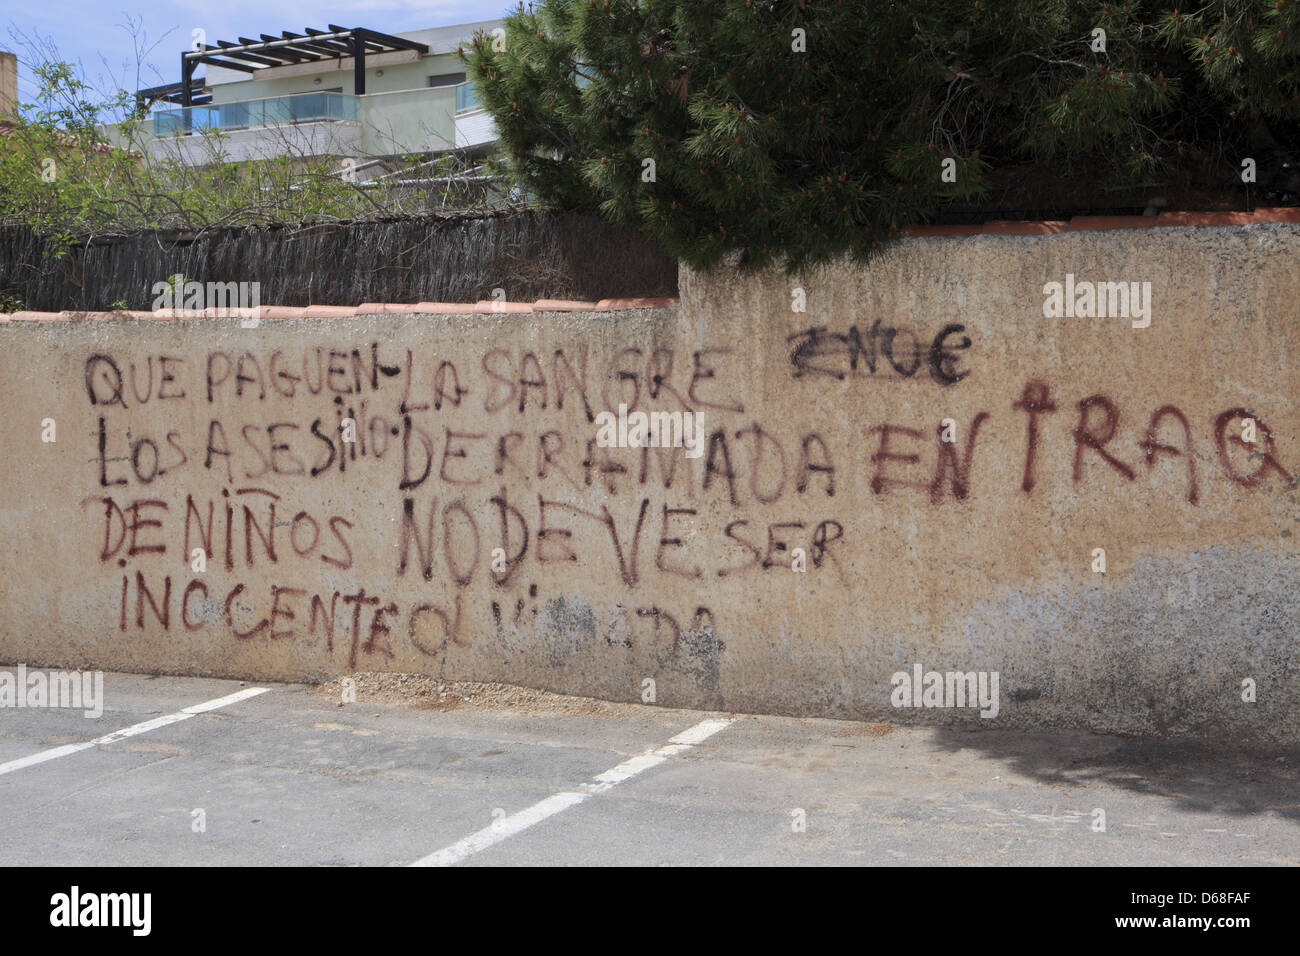 Graffiti protesting about innocent loss of life in Iraq war, Isla Plana, Murcia, Spain Stock Photo